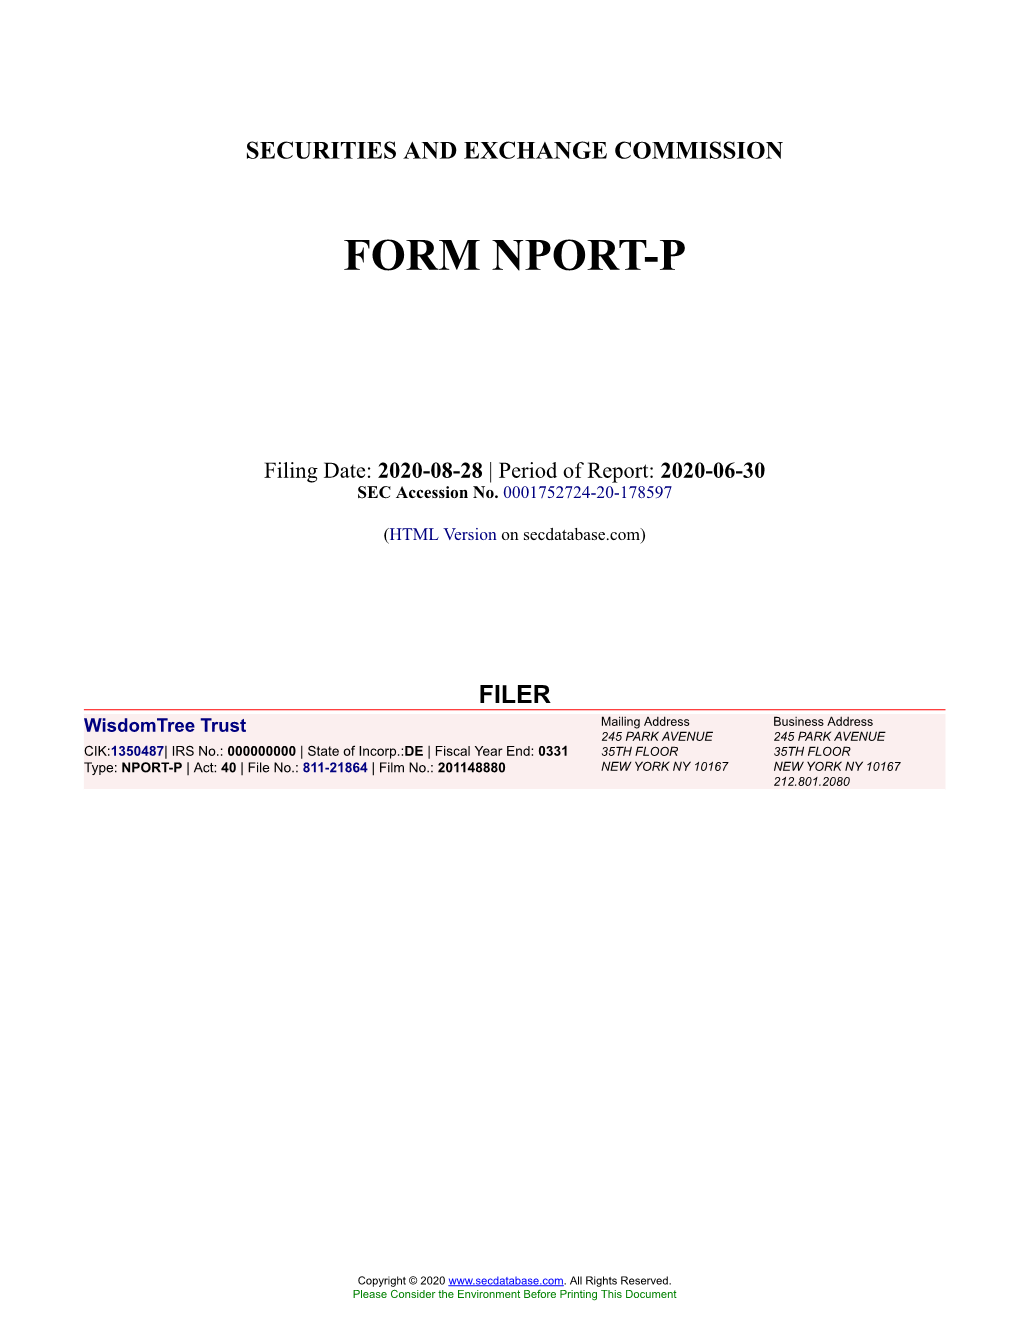 Wisdomtree Trust Form NPORT-P Filed 2020-08-28